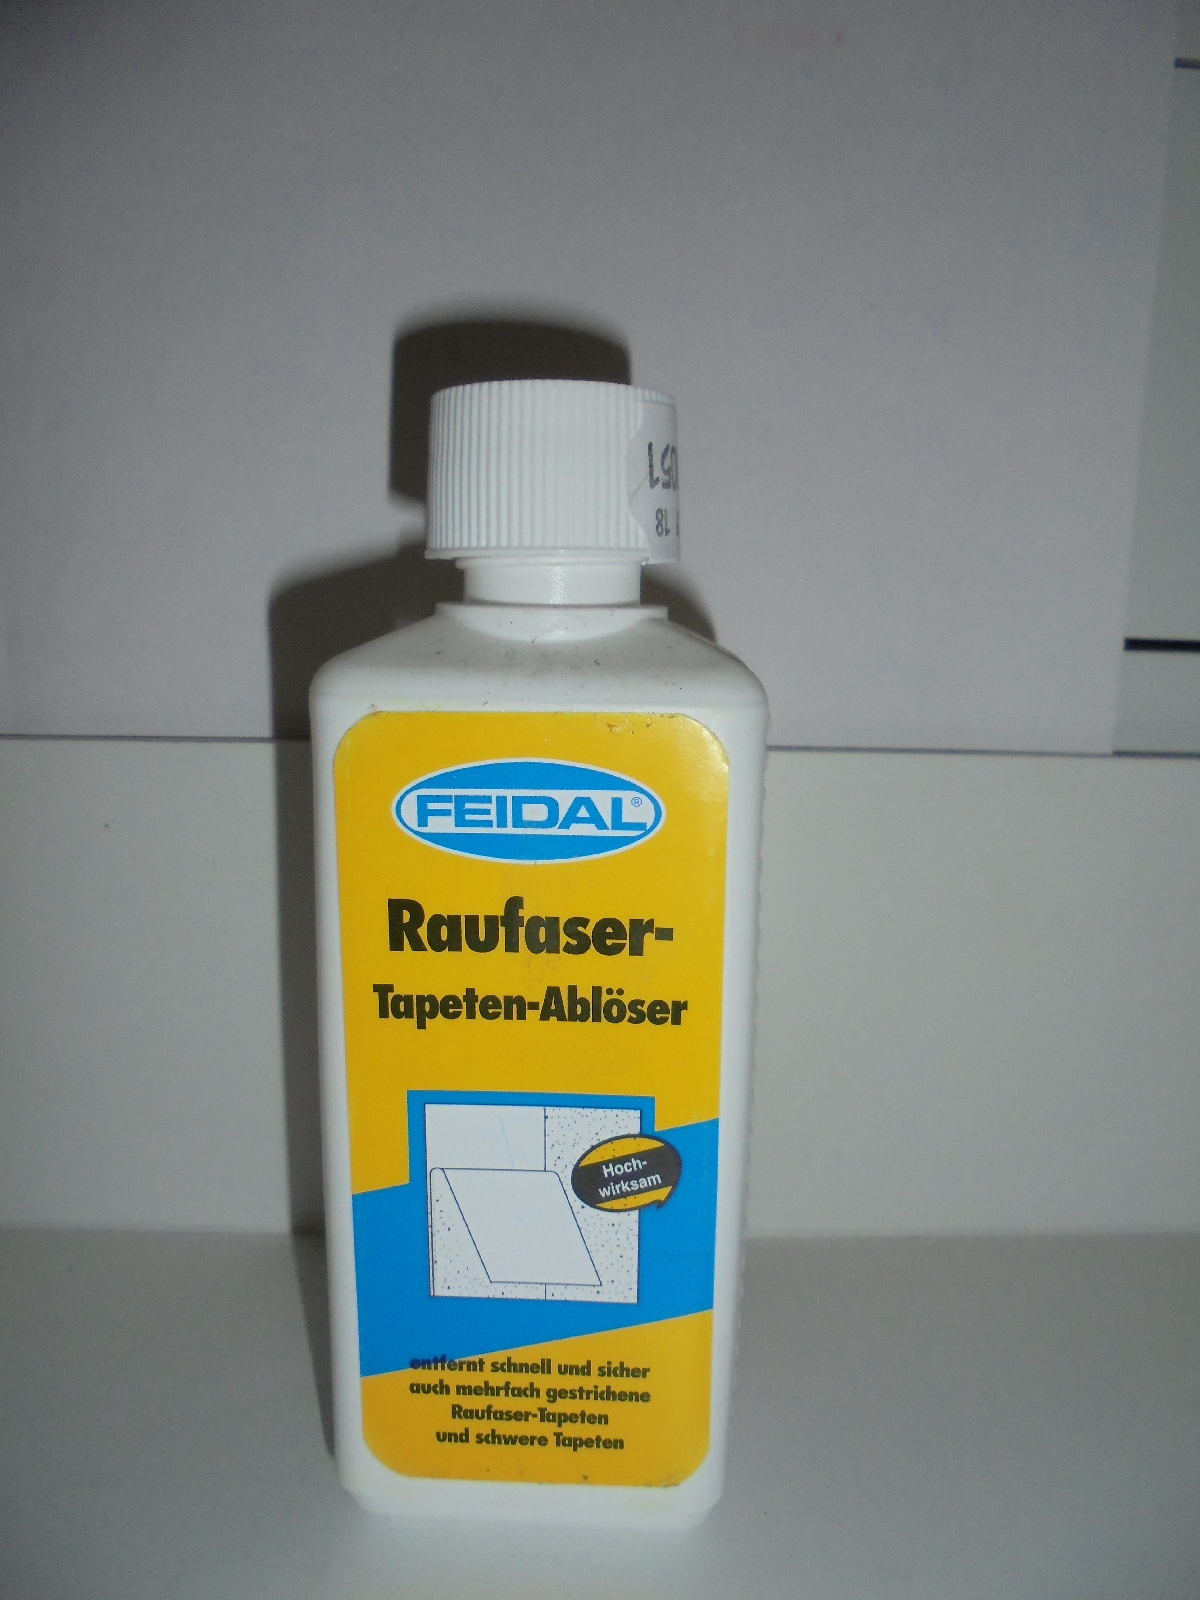 Feidal Raufaser-Tapeten-Ablöser 250 ml, Tapeten Ablöser, wässrige Lösung